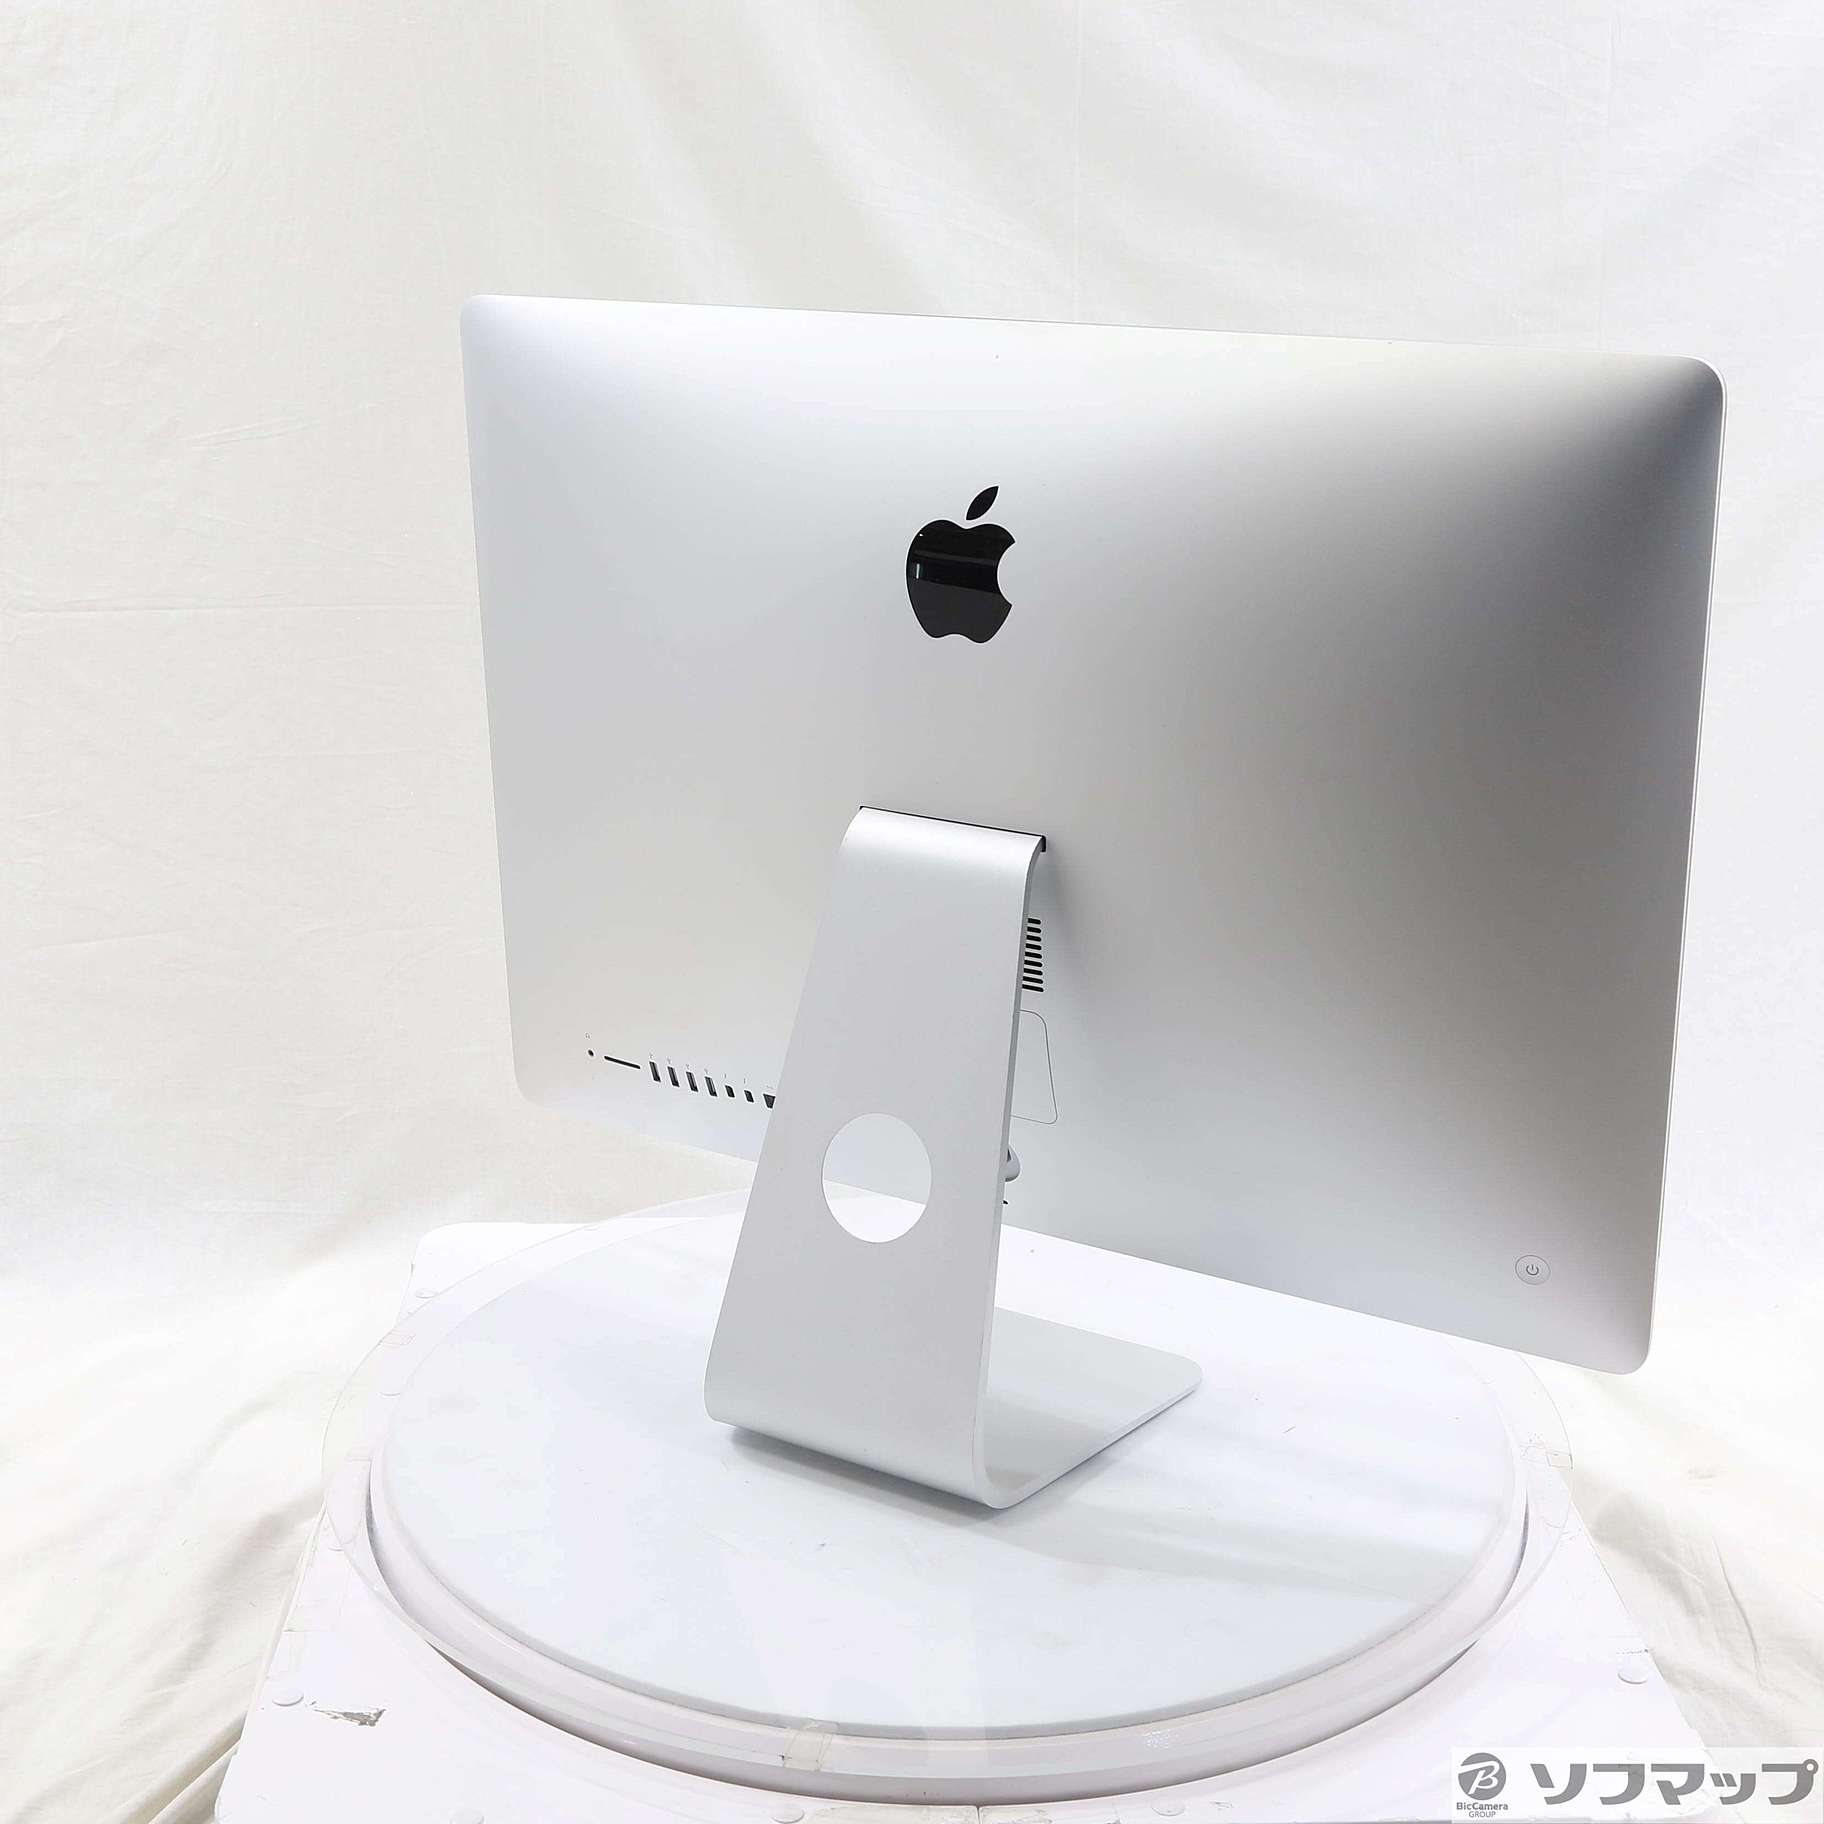 中古品〕 iMac 27-inch Late 2015 MK472J／A Core_i5 3.2GHz 8GB ...